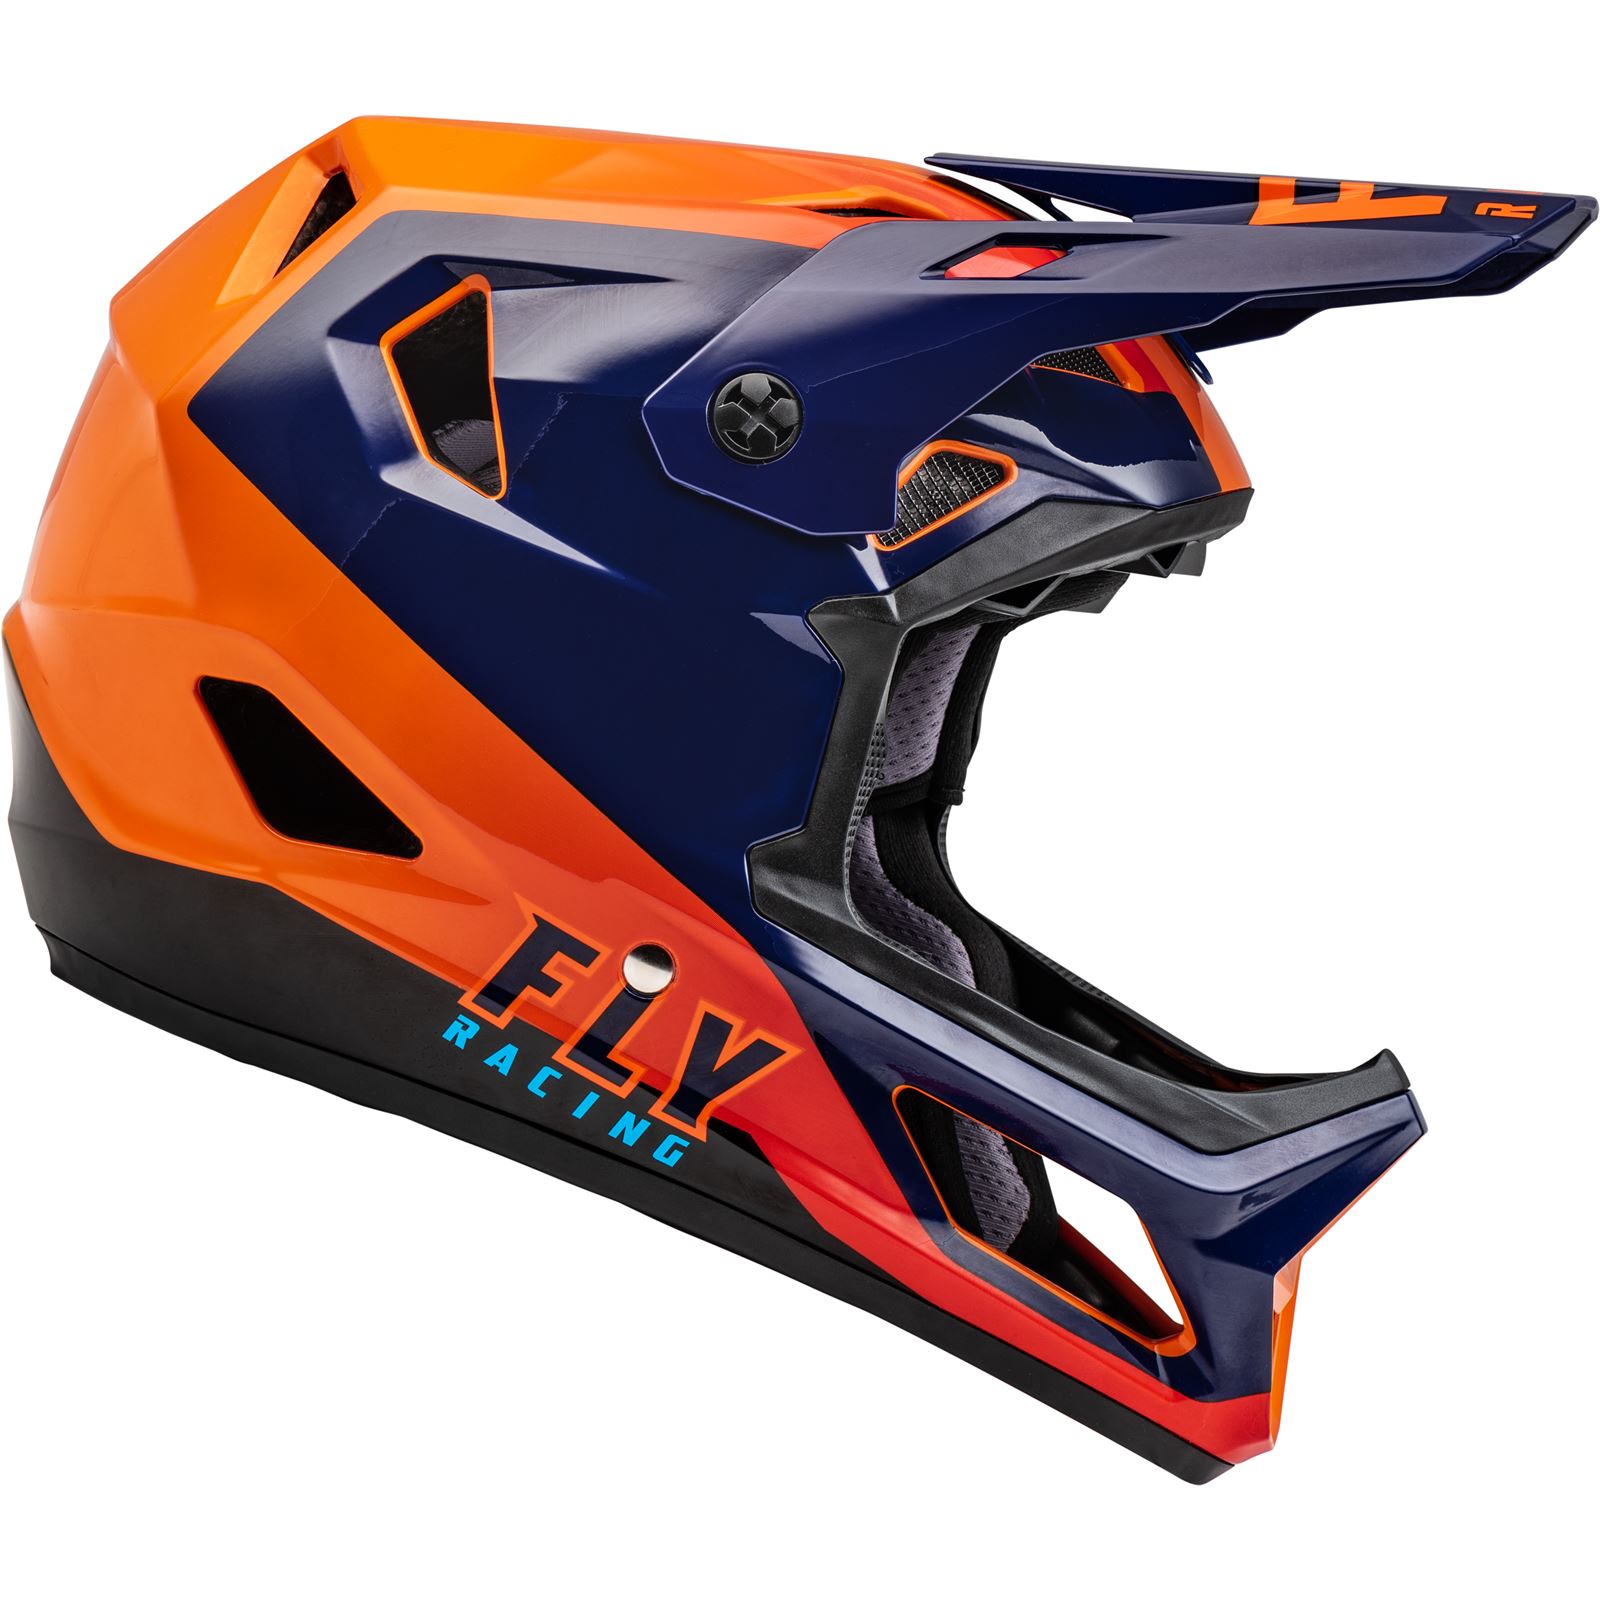 Fly Racing Youth Rayce Bike eBike BMX Helmet Navy / Orange Youth Medium